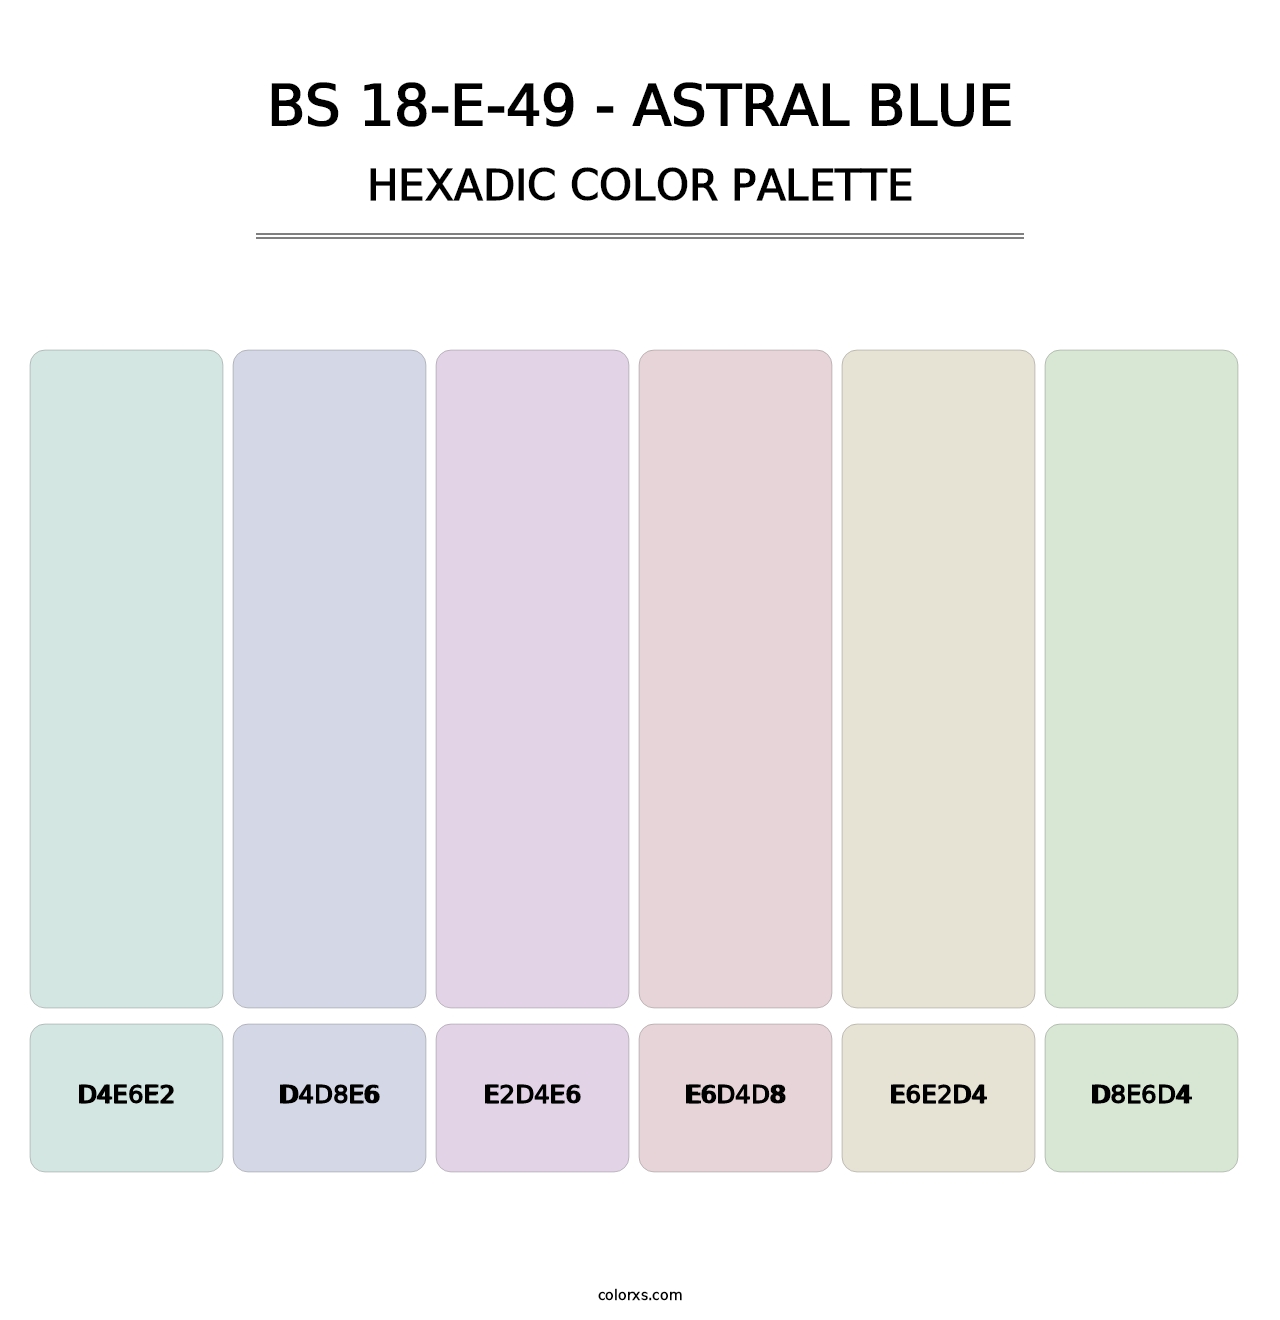 BS 18-E-49 - Astral Blue - Hexadic Color Palette